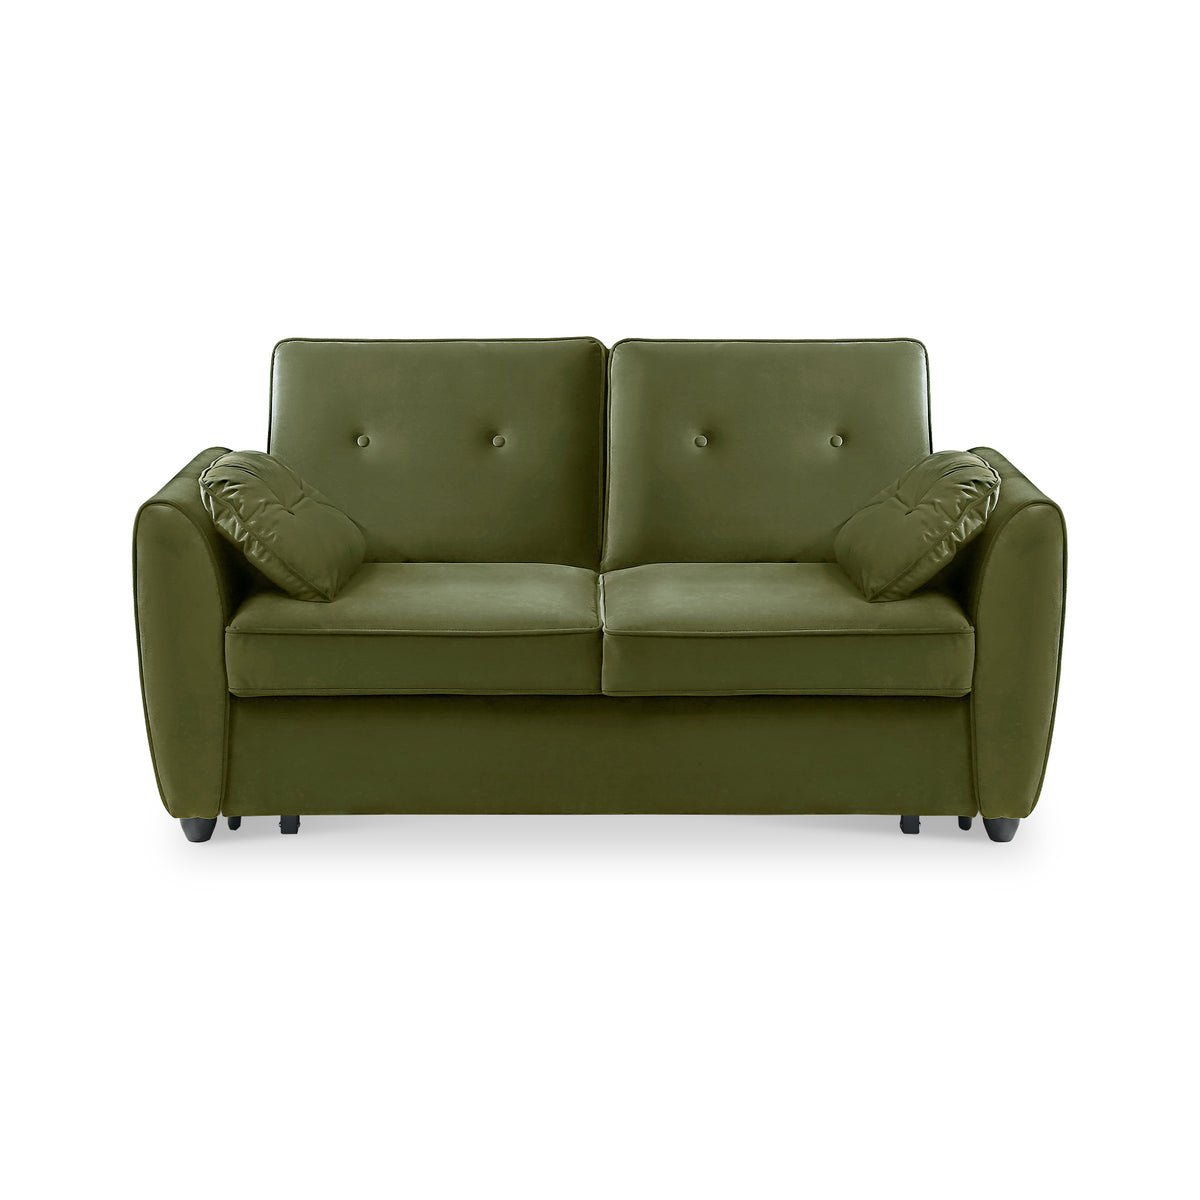 Willette Olive Green Velvet 2 Seater Pop Up Sofa Bed from Roseland Furniture